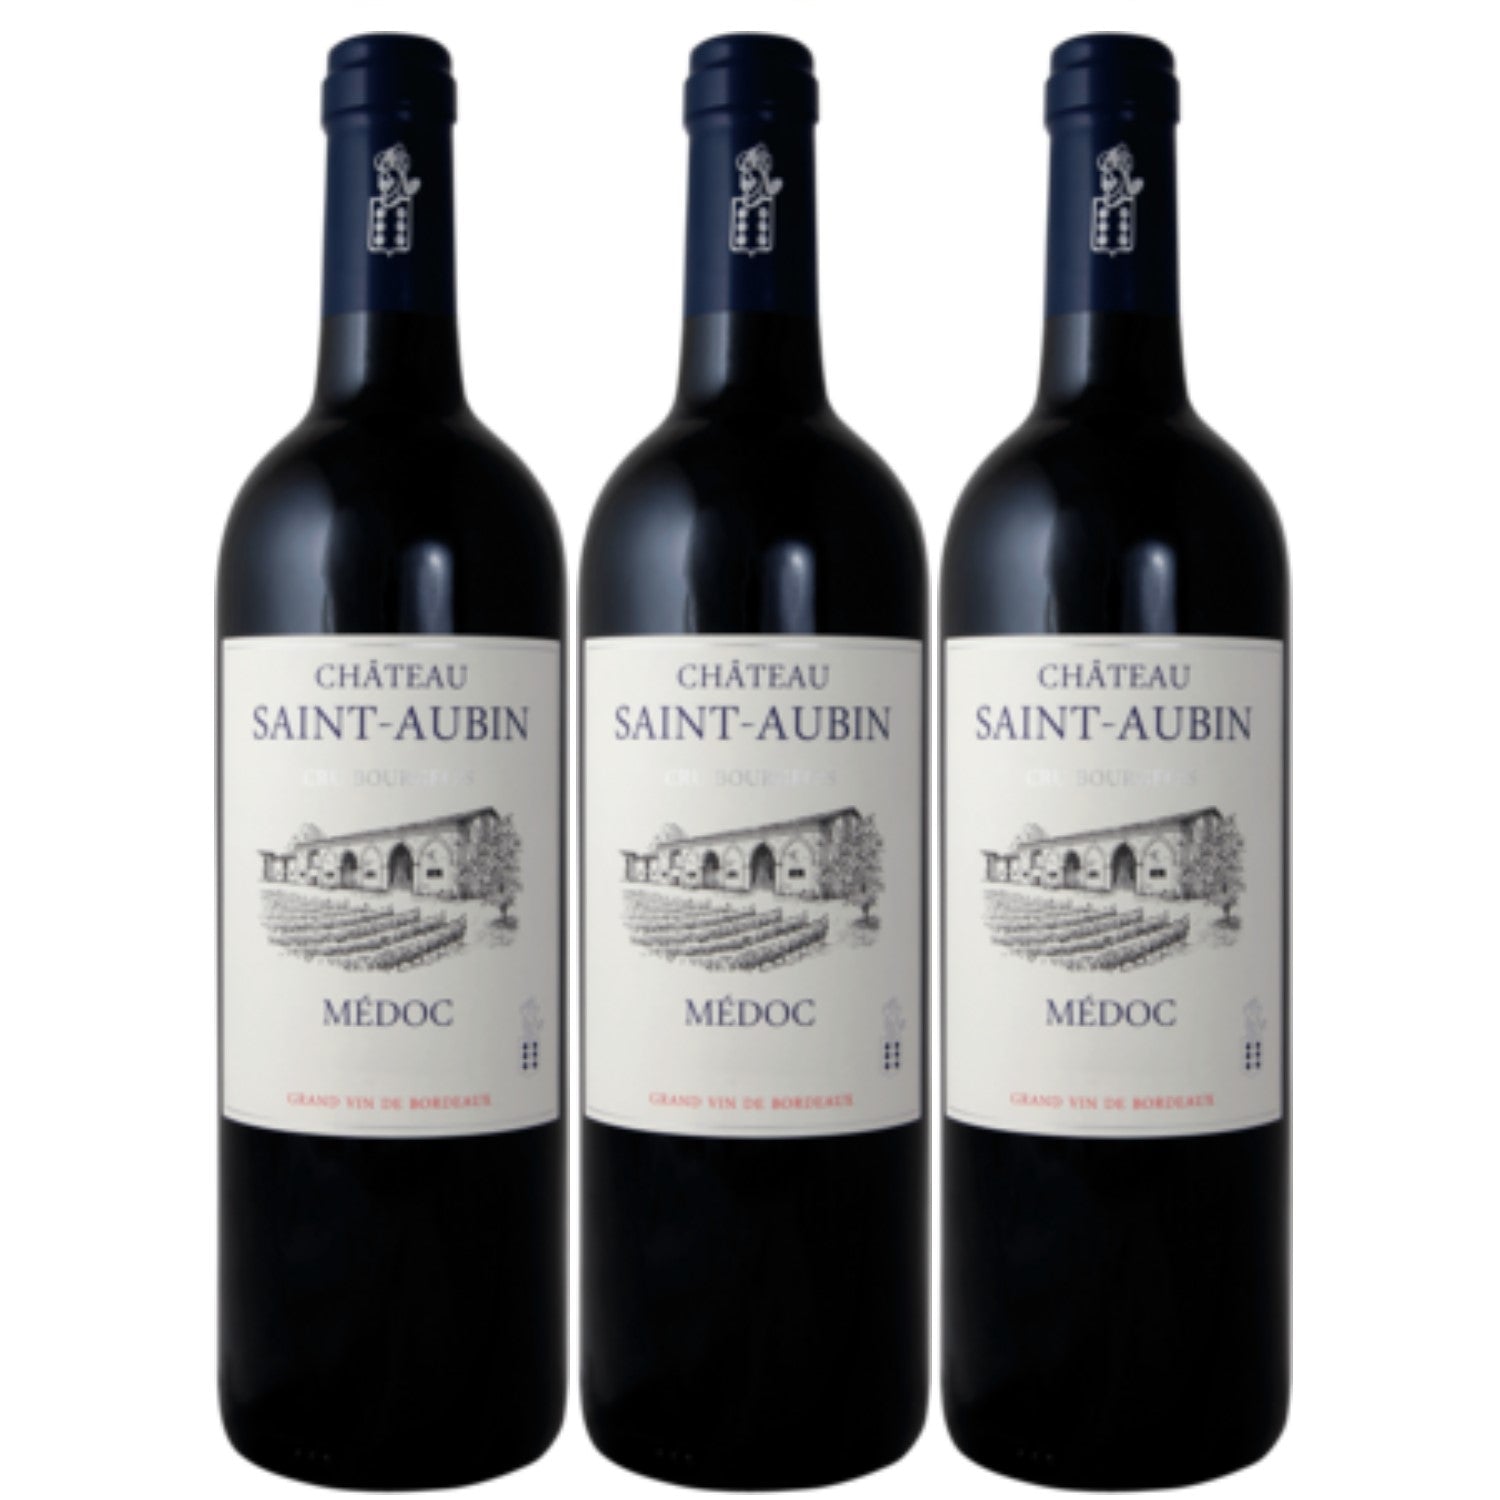 Château Saint-Aubin Cru Bourgeois Médoc AOC Rotwein Wein trocken Frankreich (3 x 0.75l) - Versanel -